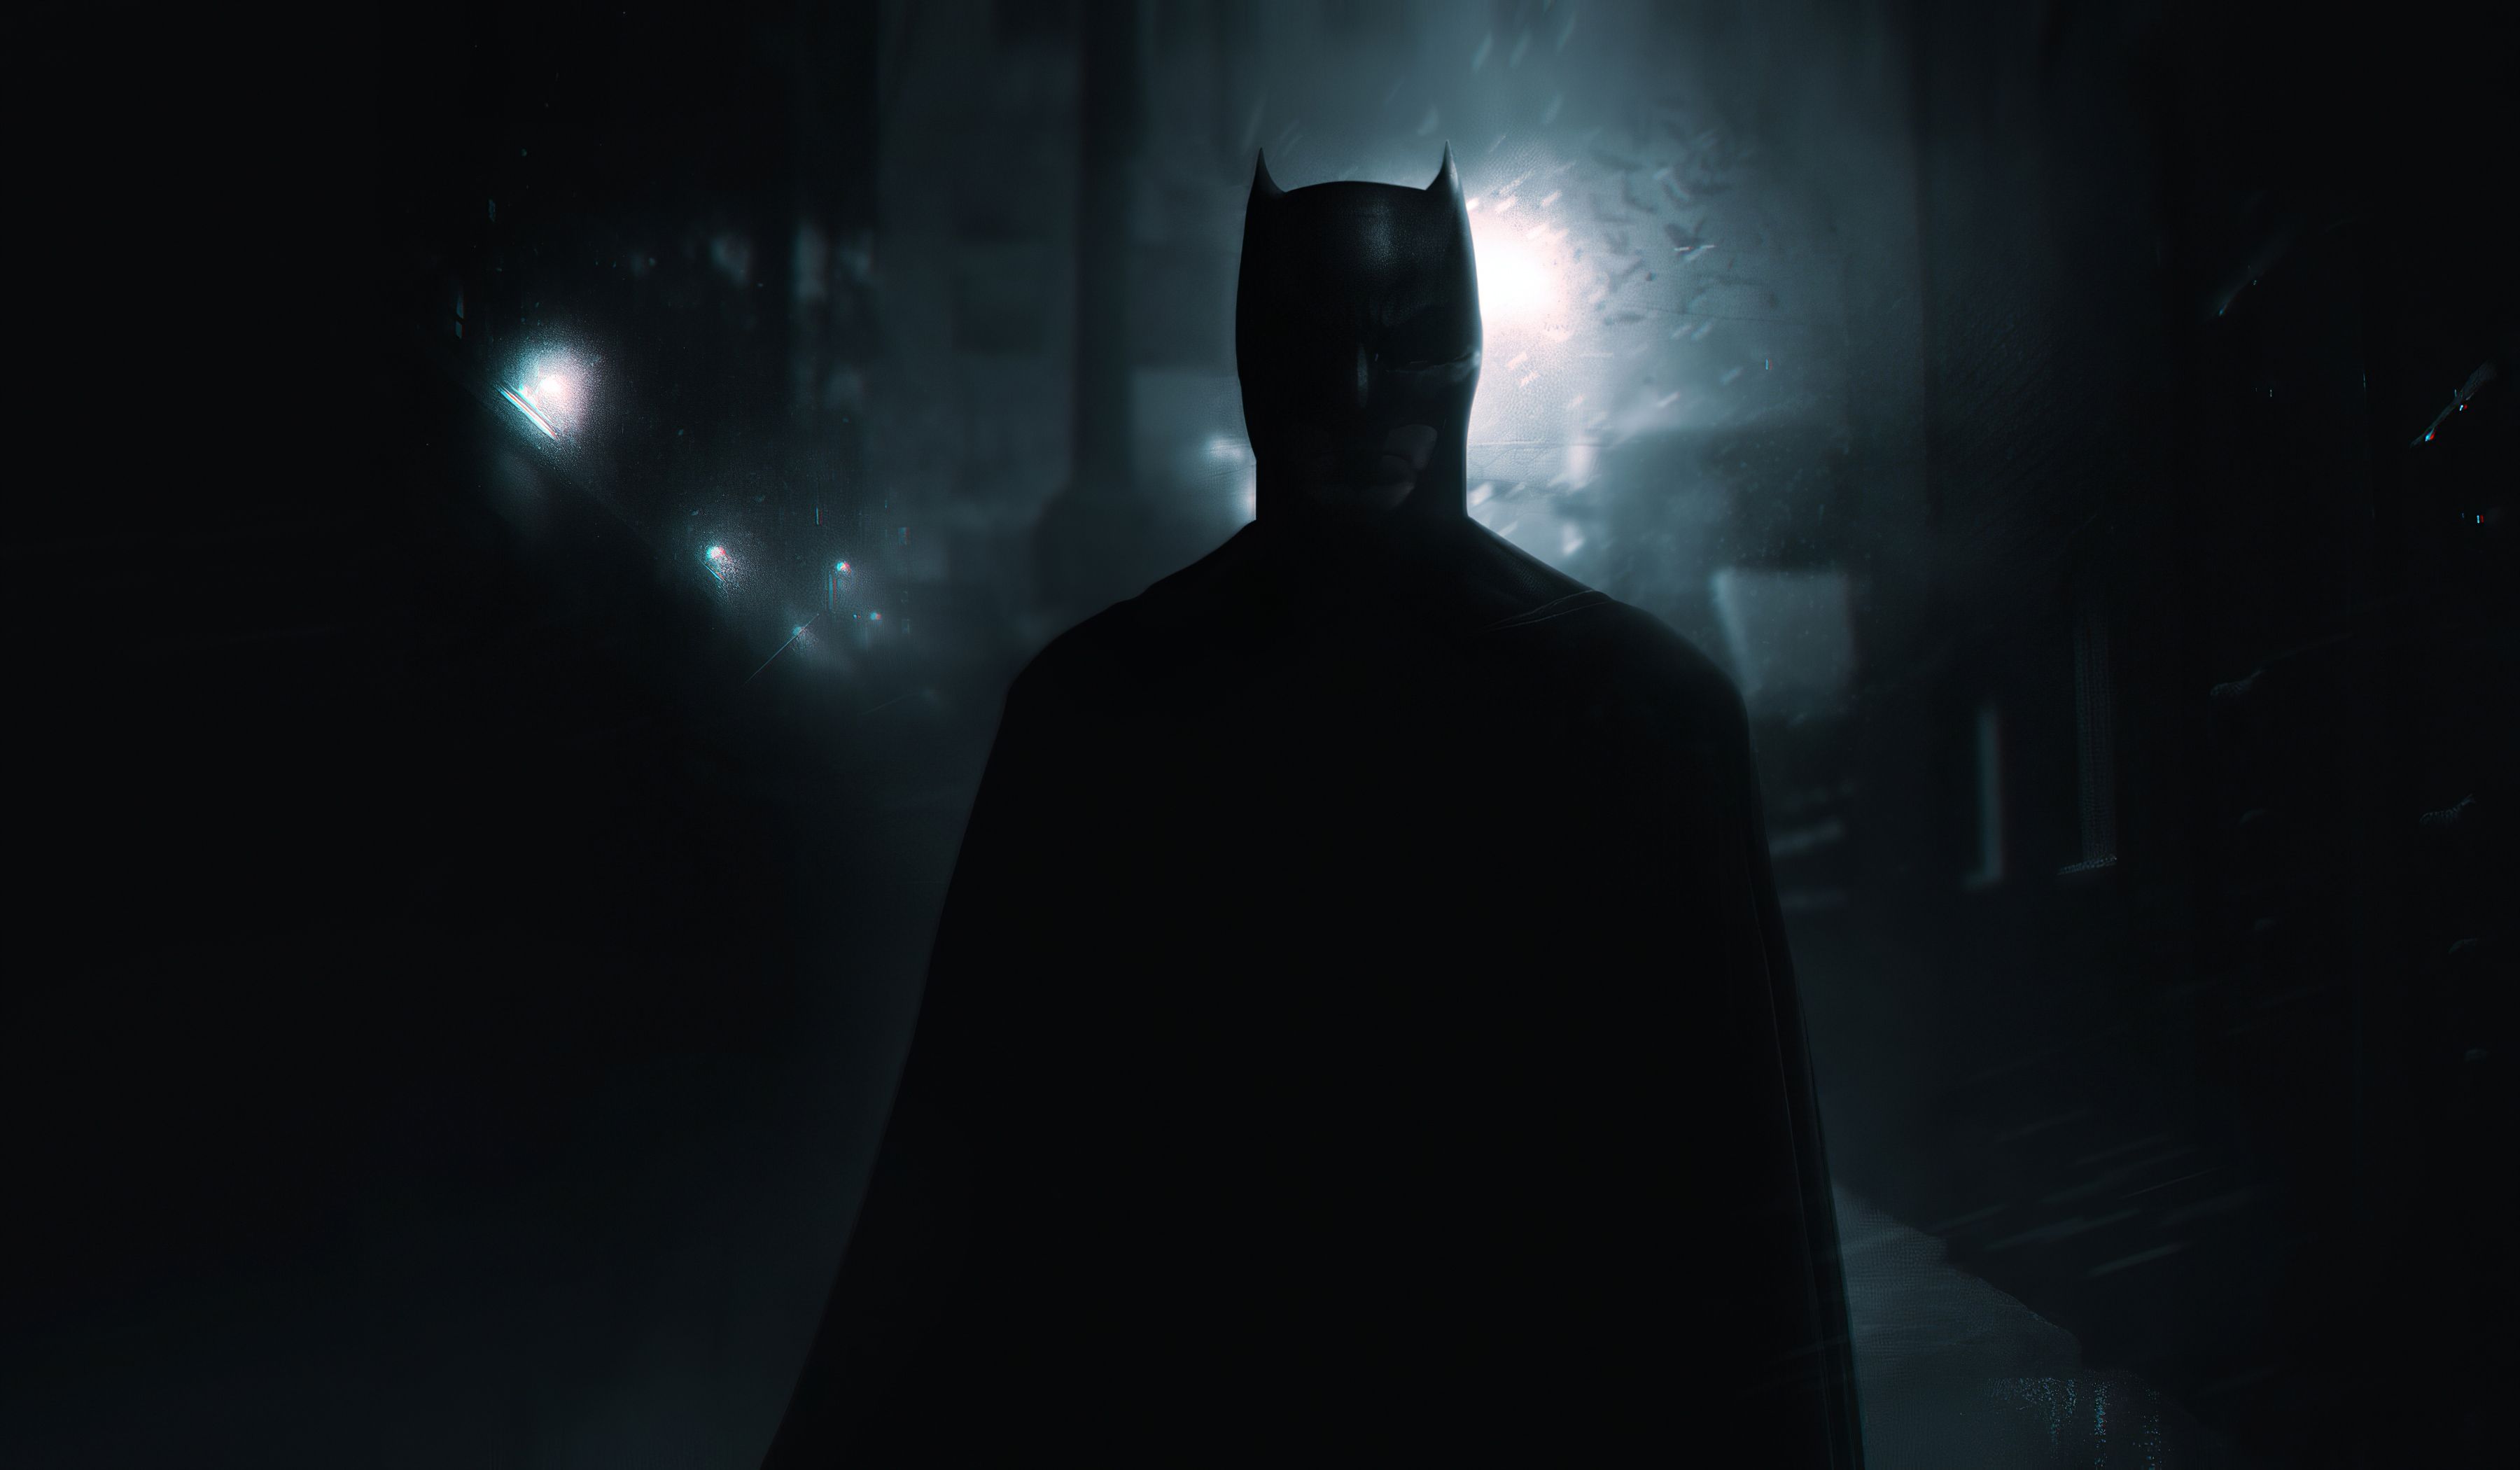 Batman In Dark 4k, HD Superheroes, 4k Wallpaper, Image, Background, Photo and Picture